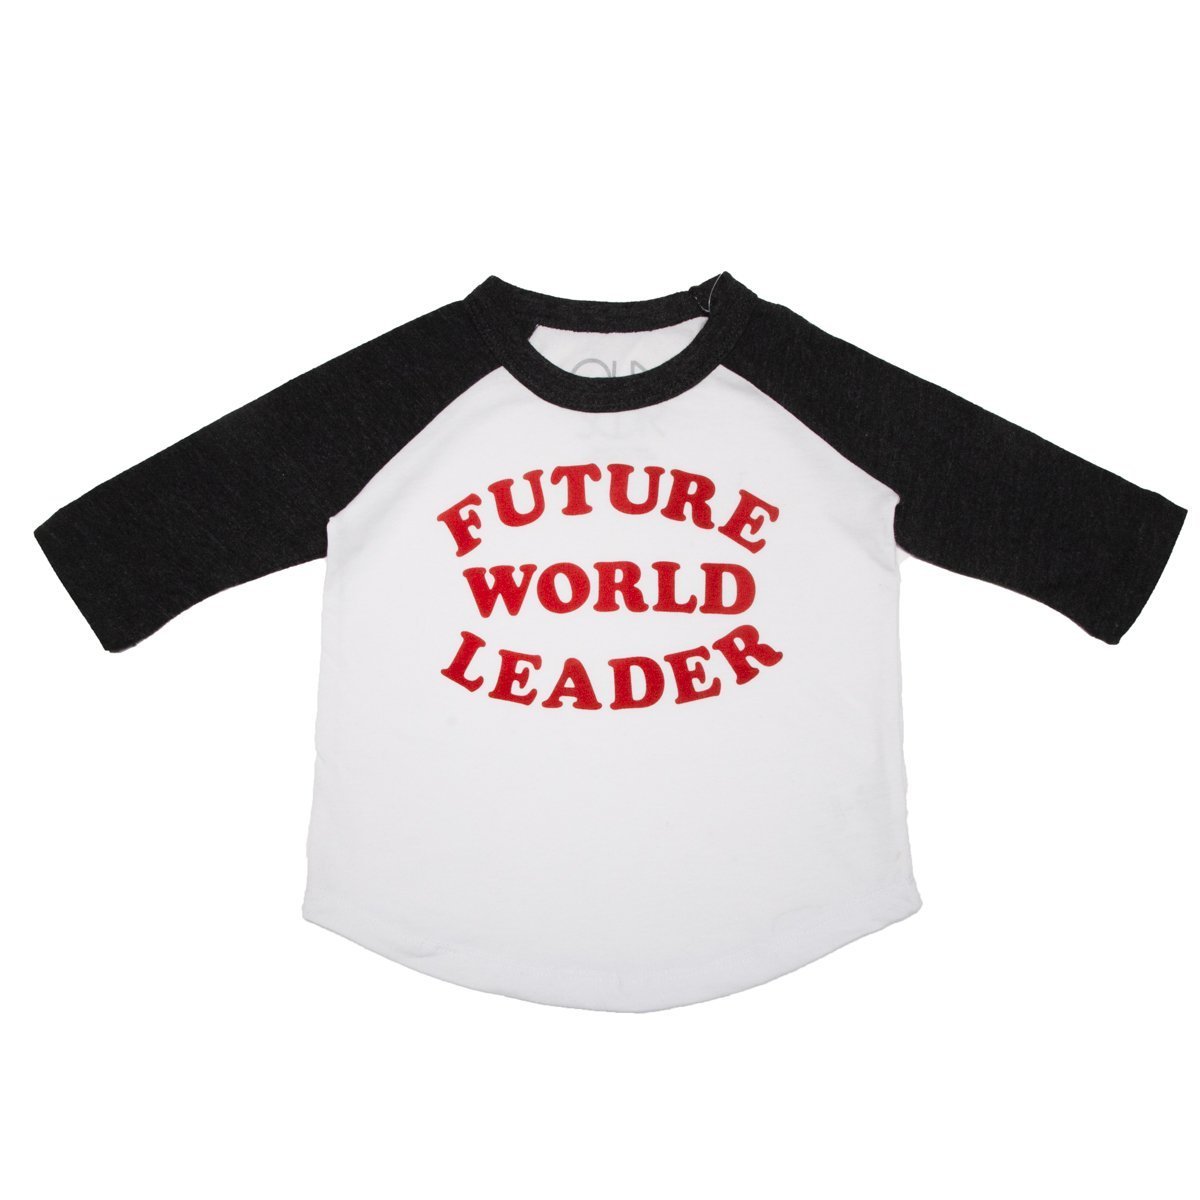 FUTURE WORLD LEADER 3/4 SLEEVE TSHIRT - LONG SLEEVE TOPS